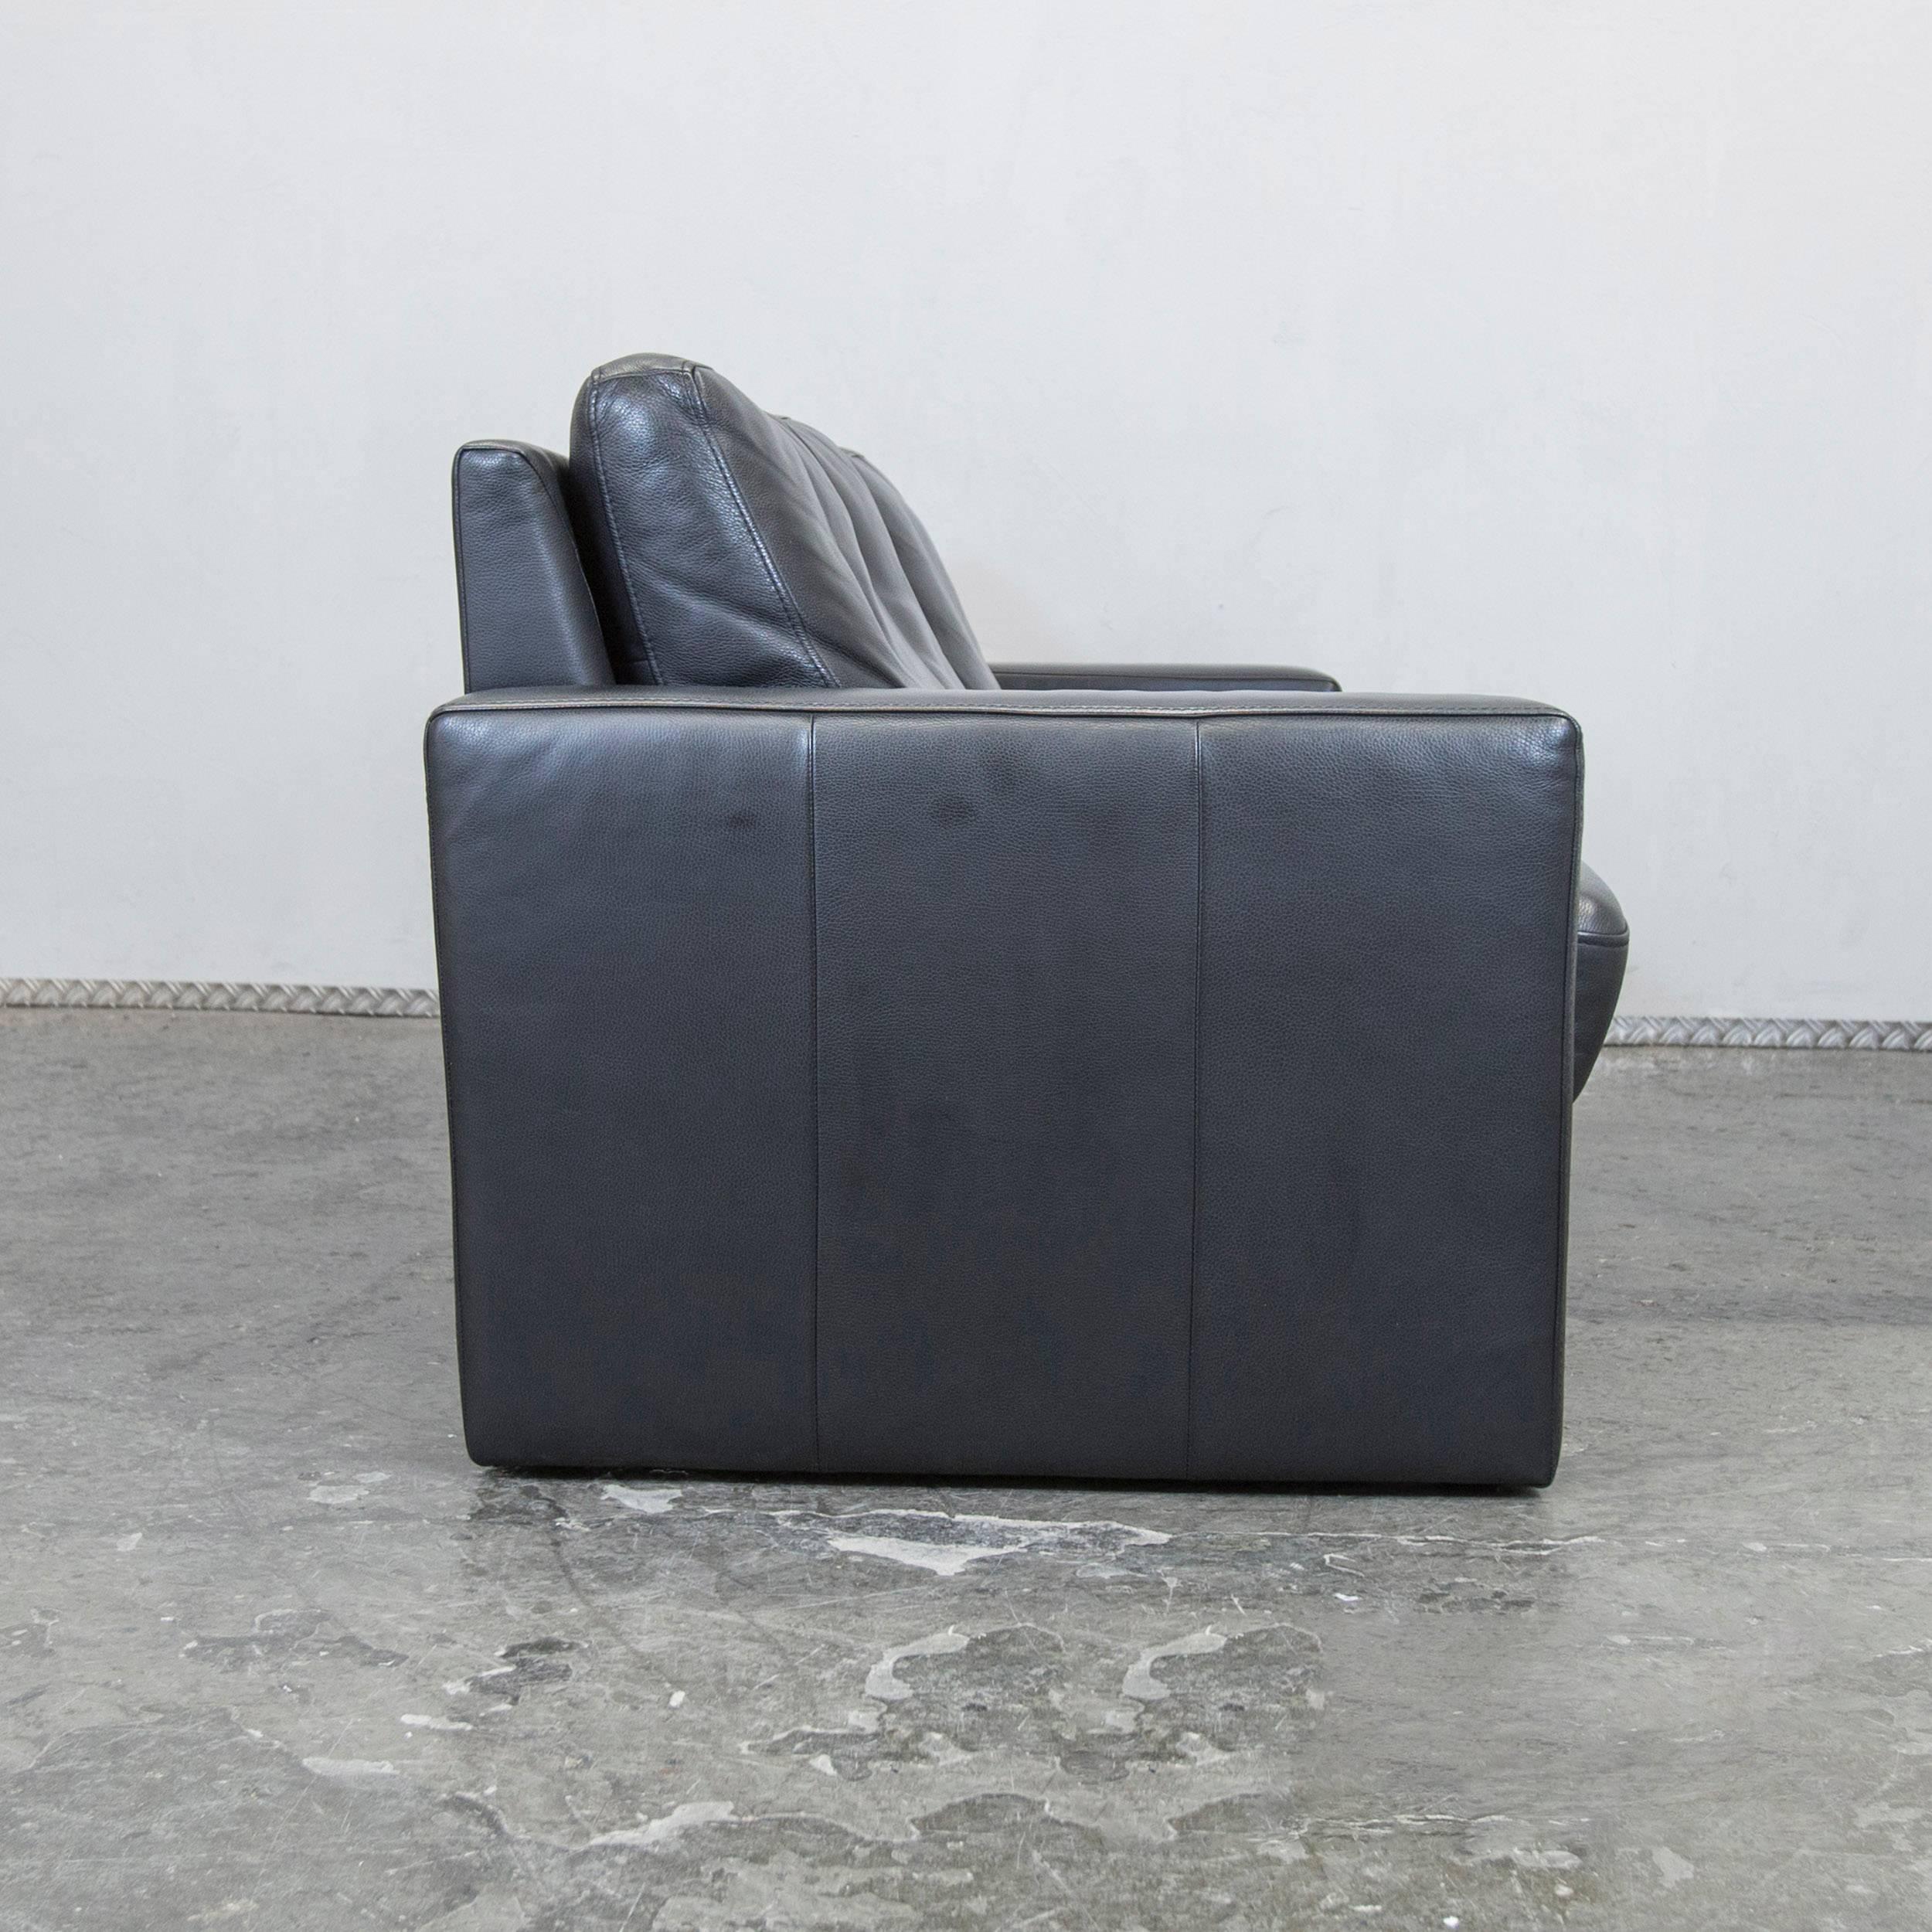 Külkens & Sohn Designer Leather Sofa Black Three-Seat Couch Modern 2